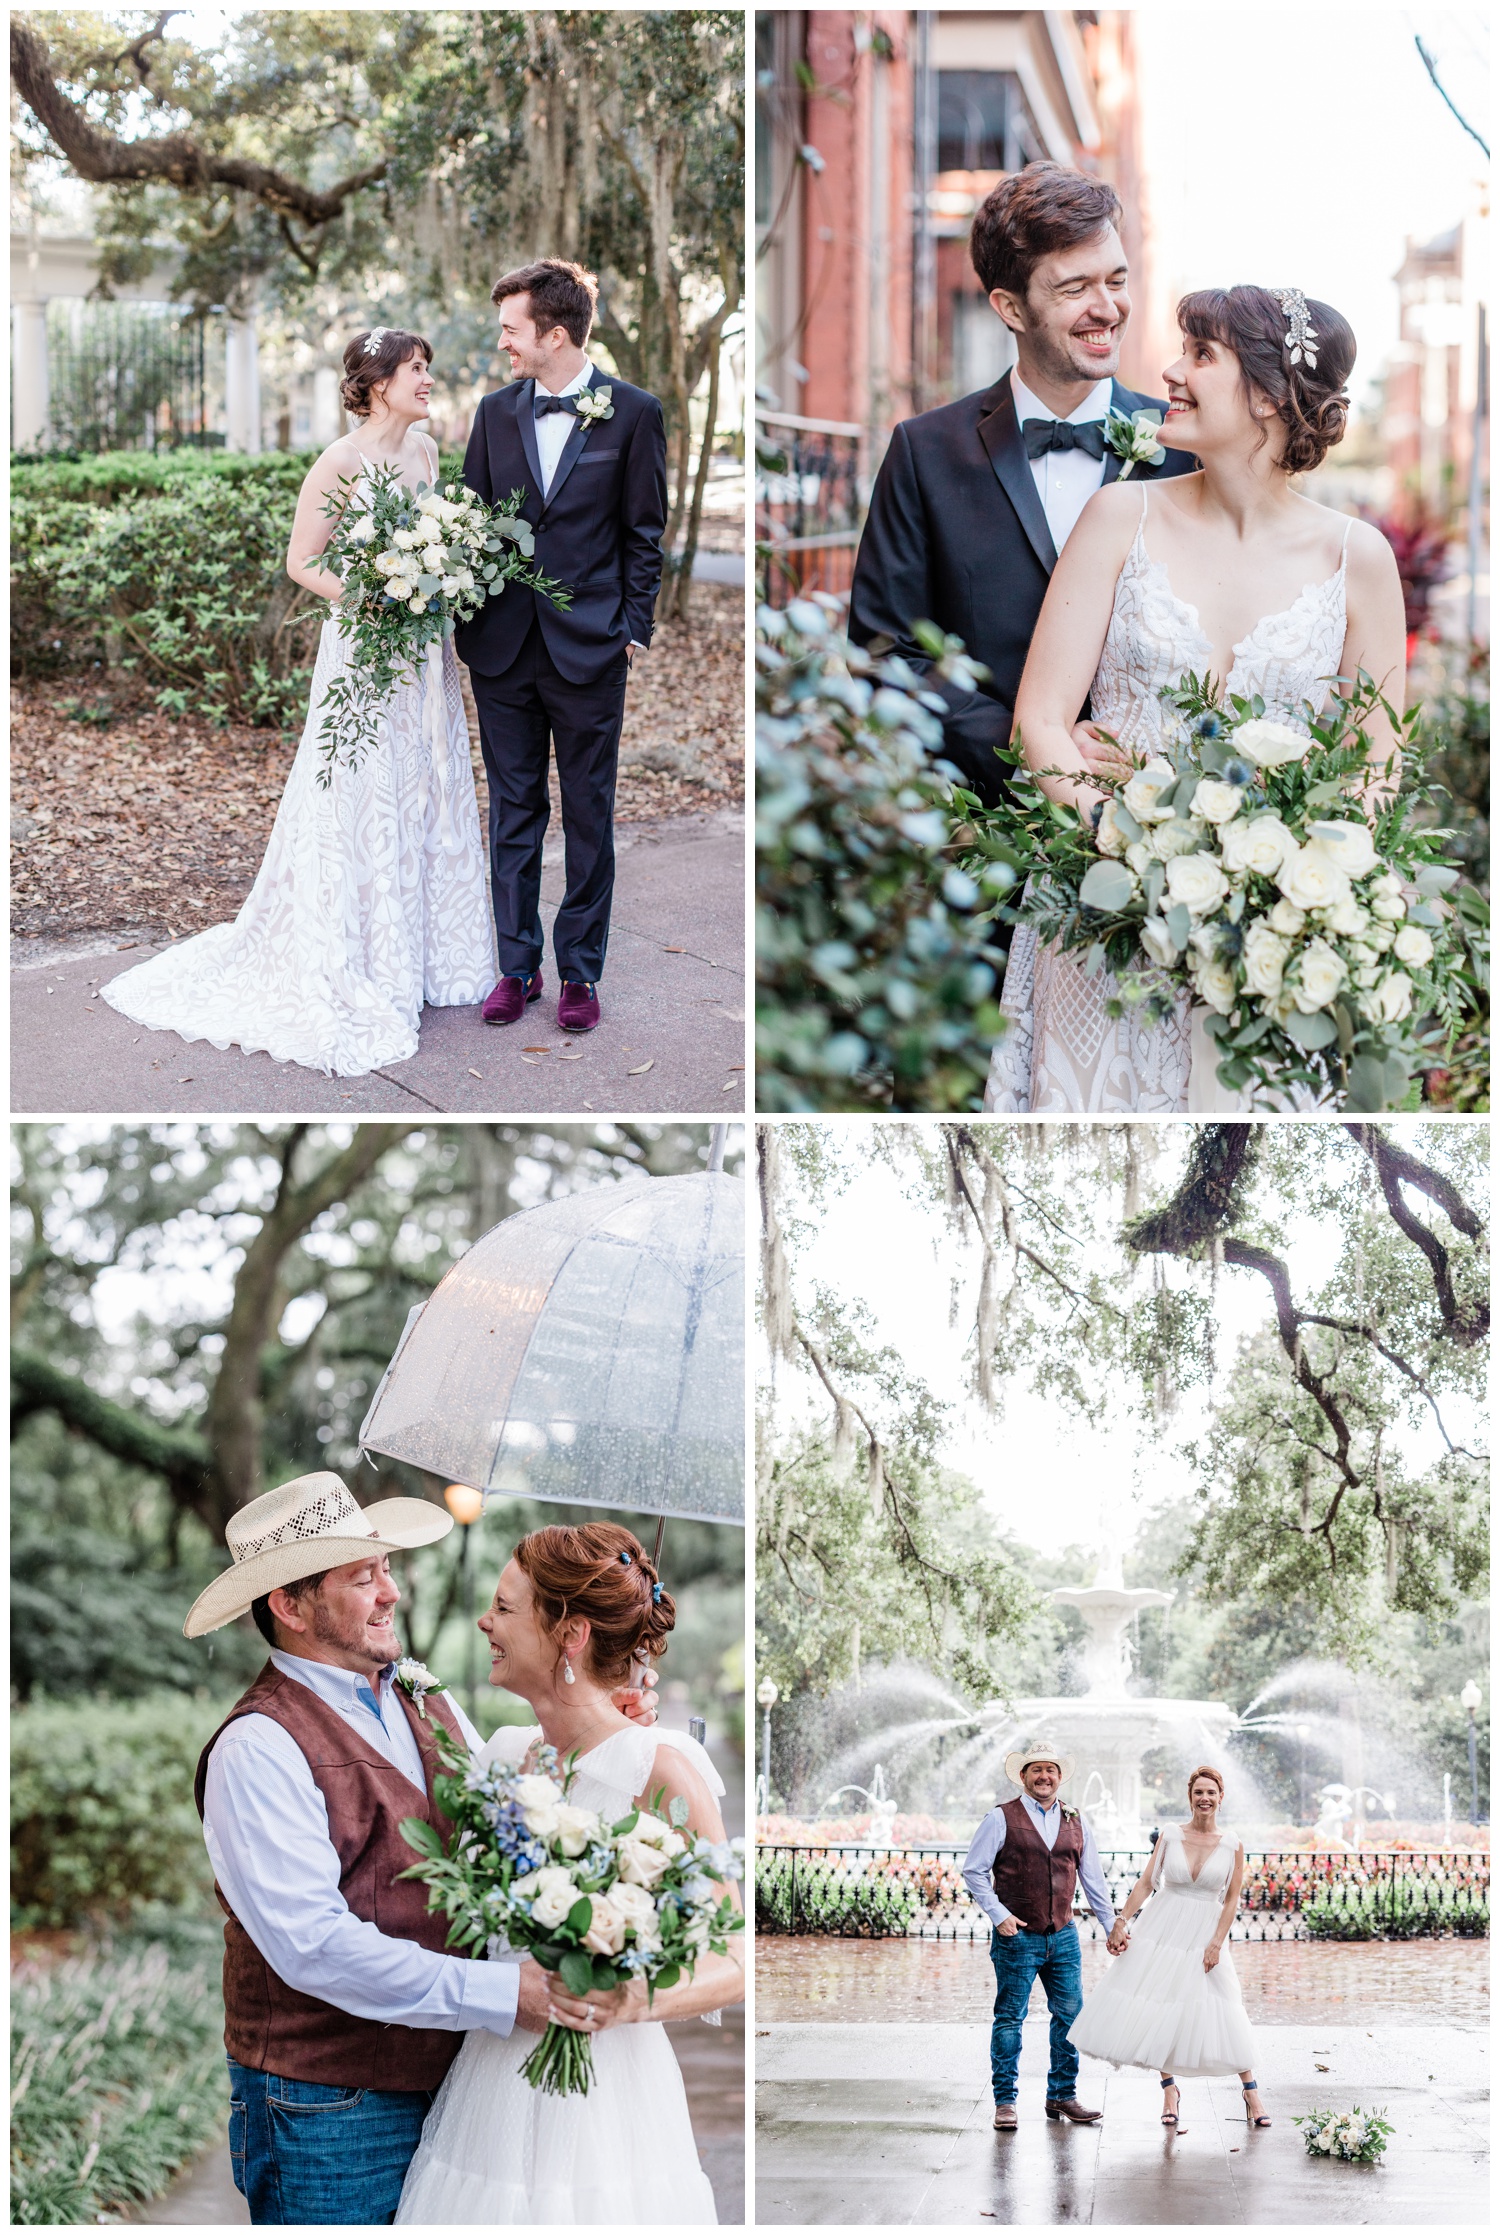 The Savannah Elopement Package - All Inclusive elopement in Savannah